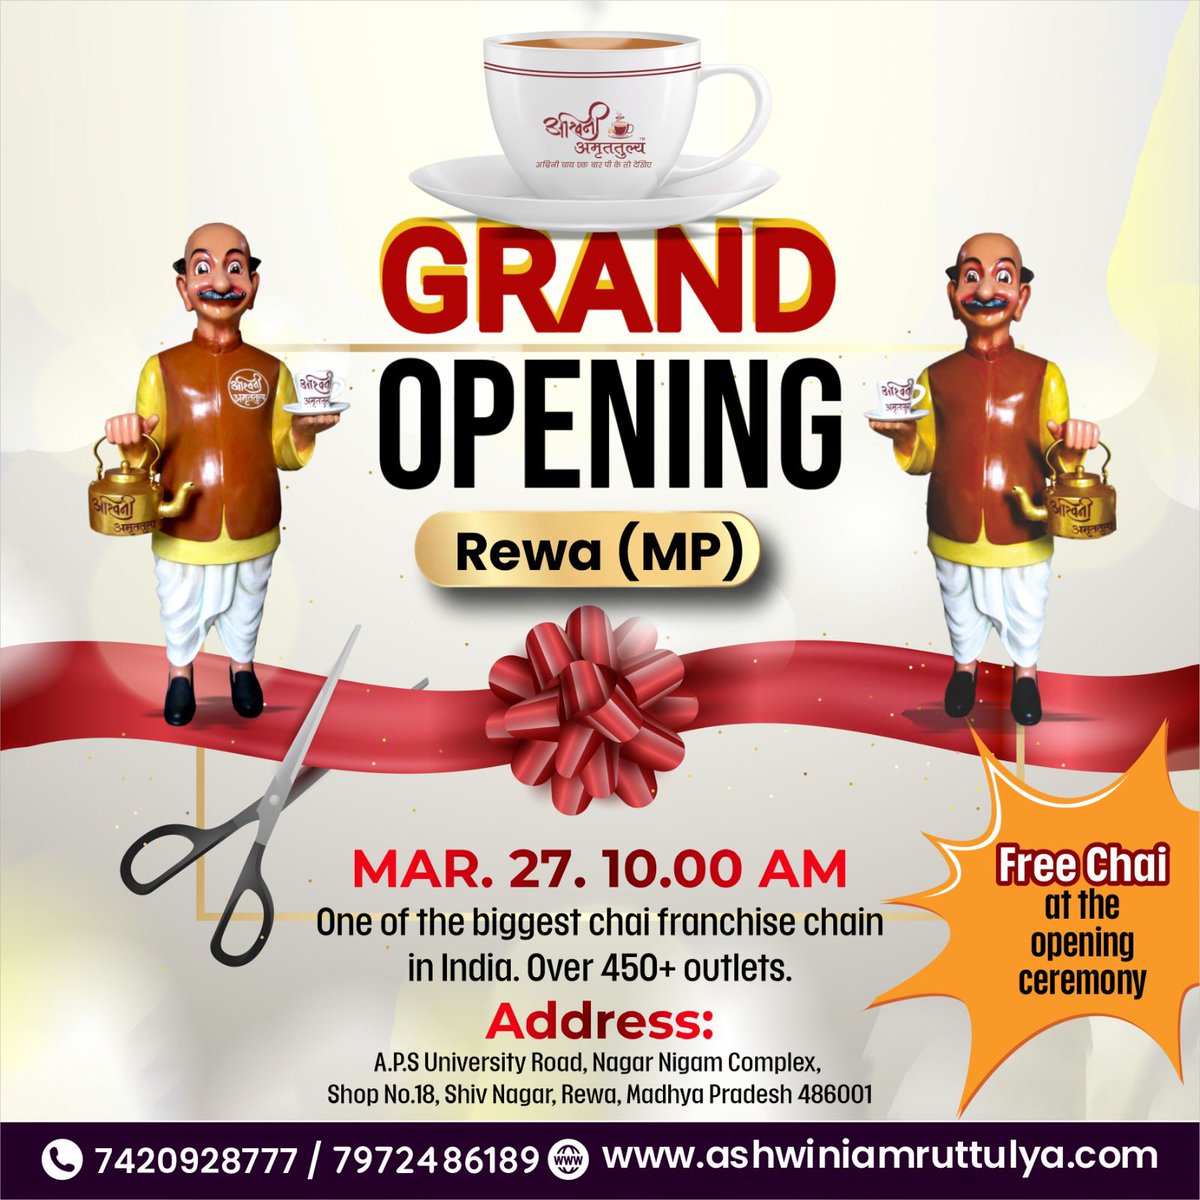 Thrilled to announce the grand opening of Ashwini Amruttulya at REWA MP....❤☕🌴😇 To know more 👇 Visit 👉 ashwiniamruttulya.com Call 🤙 +91 7420928777 / 7972486189 #ashwiniamruttulya #franchise #अश्विनीचायएकबारपिकेतोदेखिए #brand #amruttulyabrand #happycustomer #tea #rewa #MP